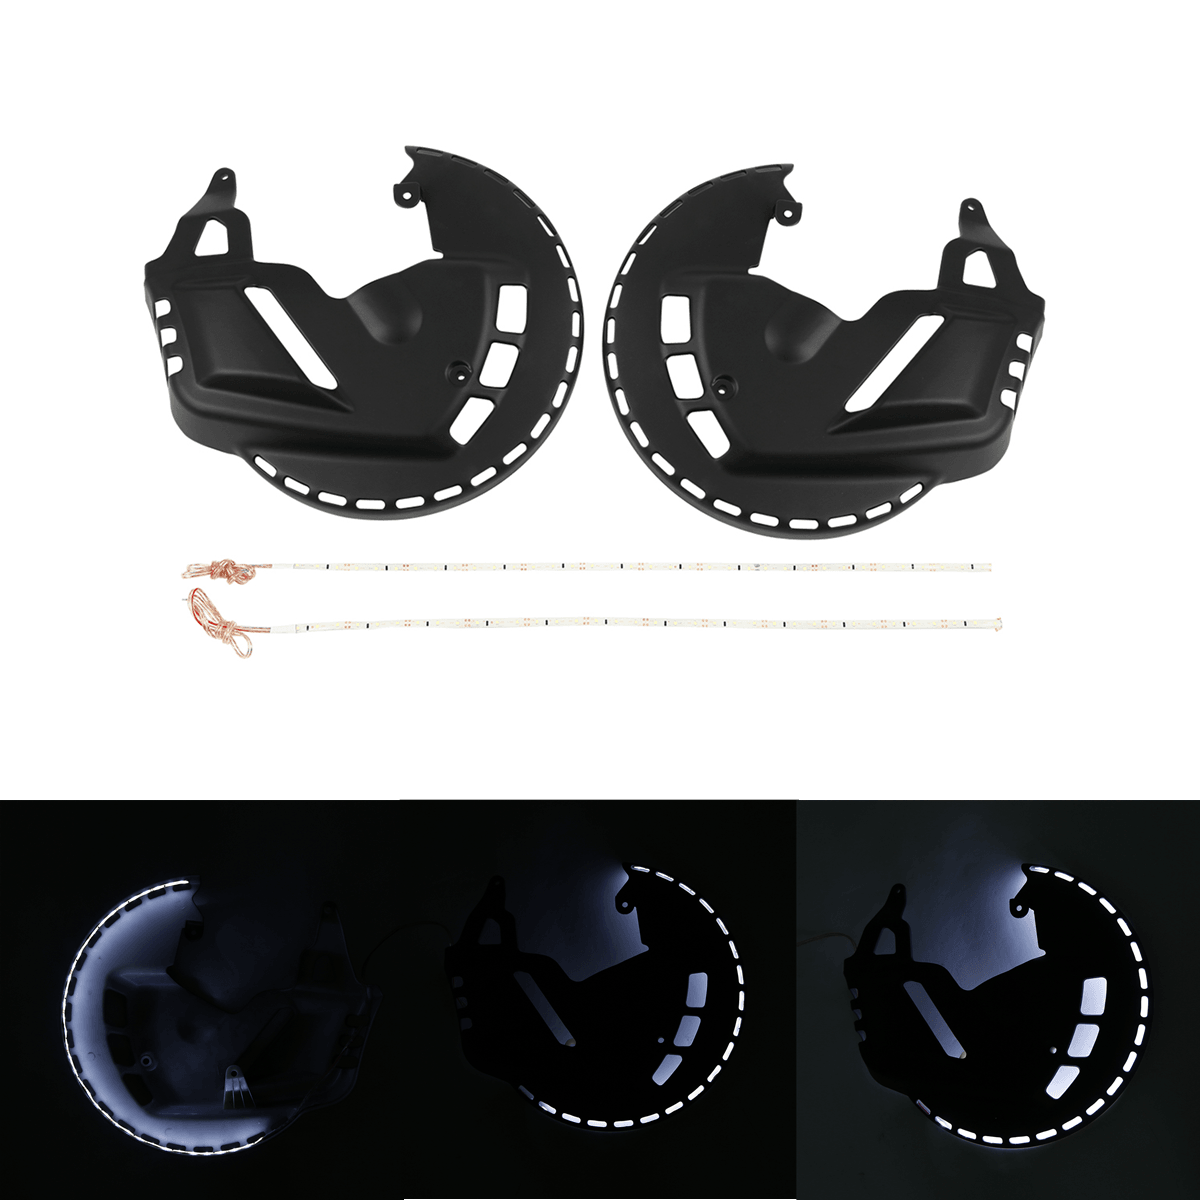 Brake Rotor Covers LED White Light Fit For Honda Goldwing GL1800 01-17 F6B 13-17 - Moto Life Products